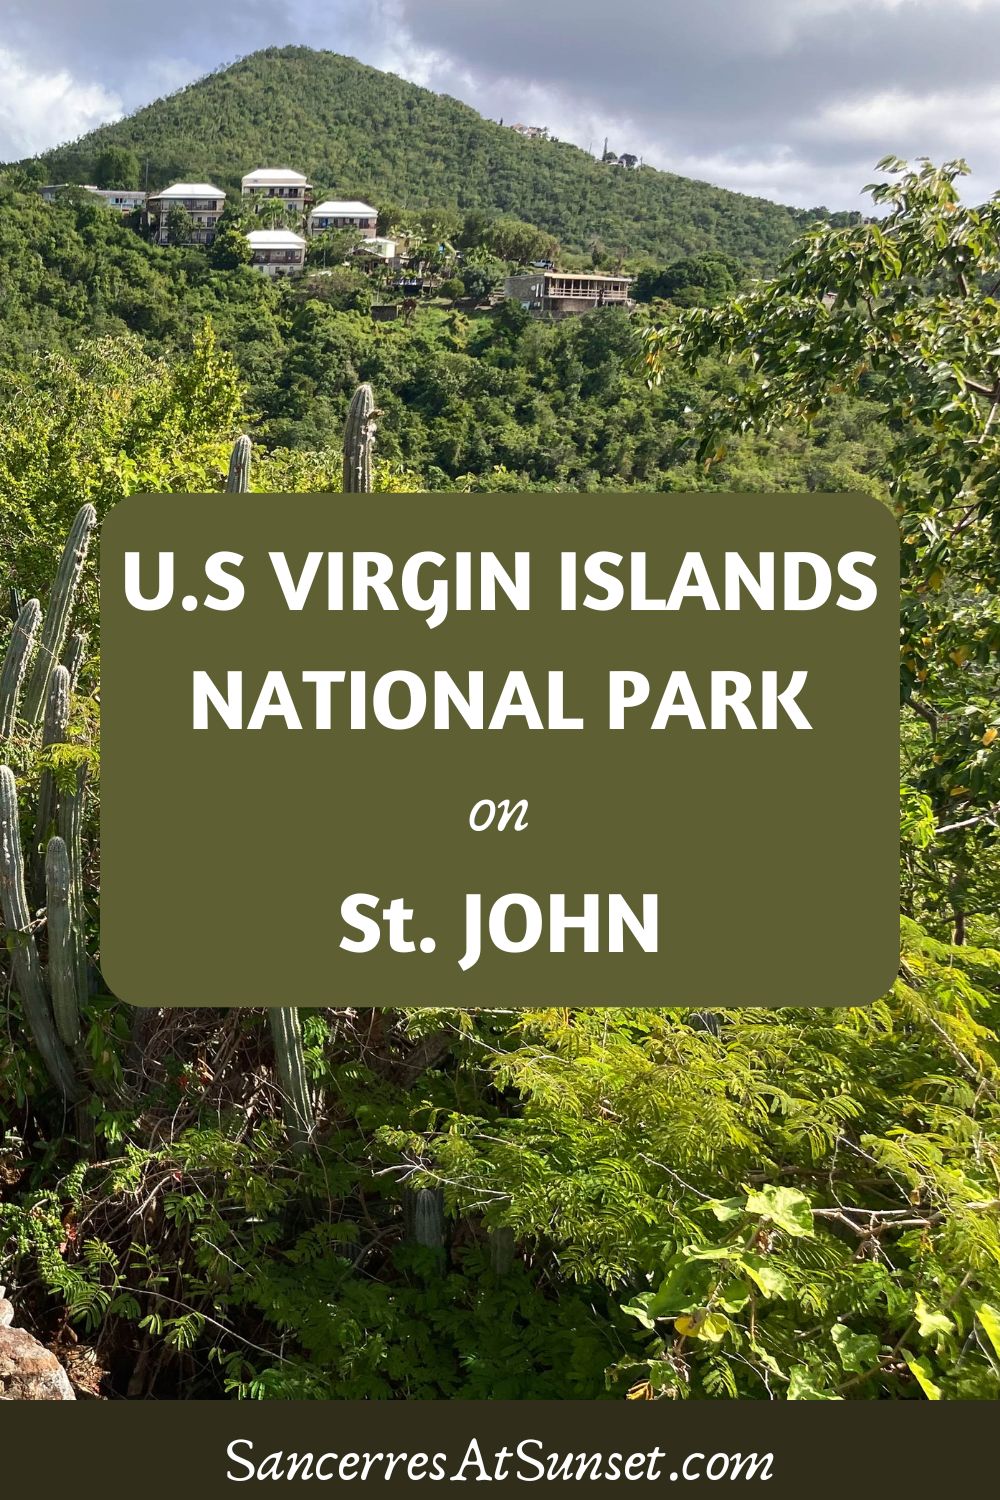 U.S. Virgin Islands National Park on St. John